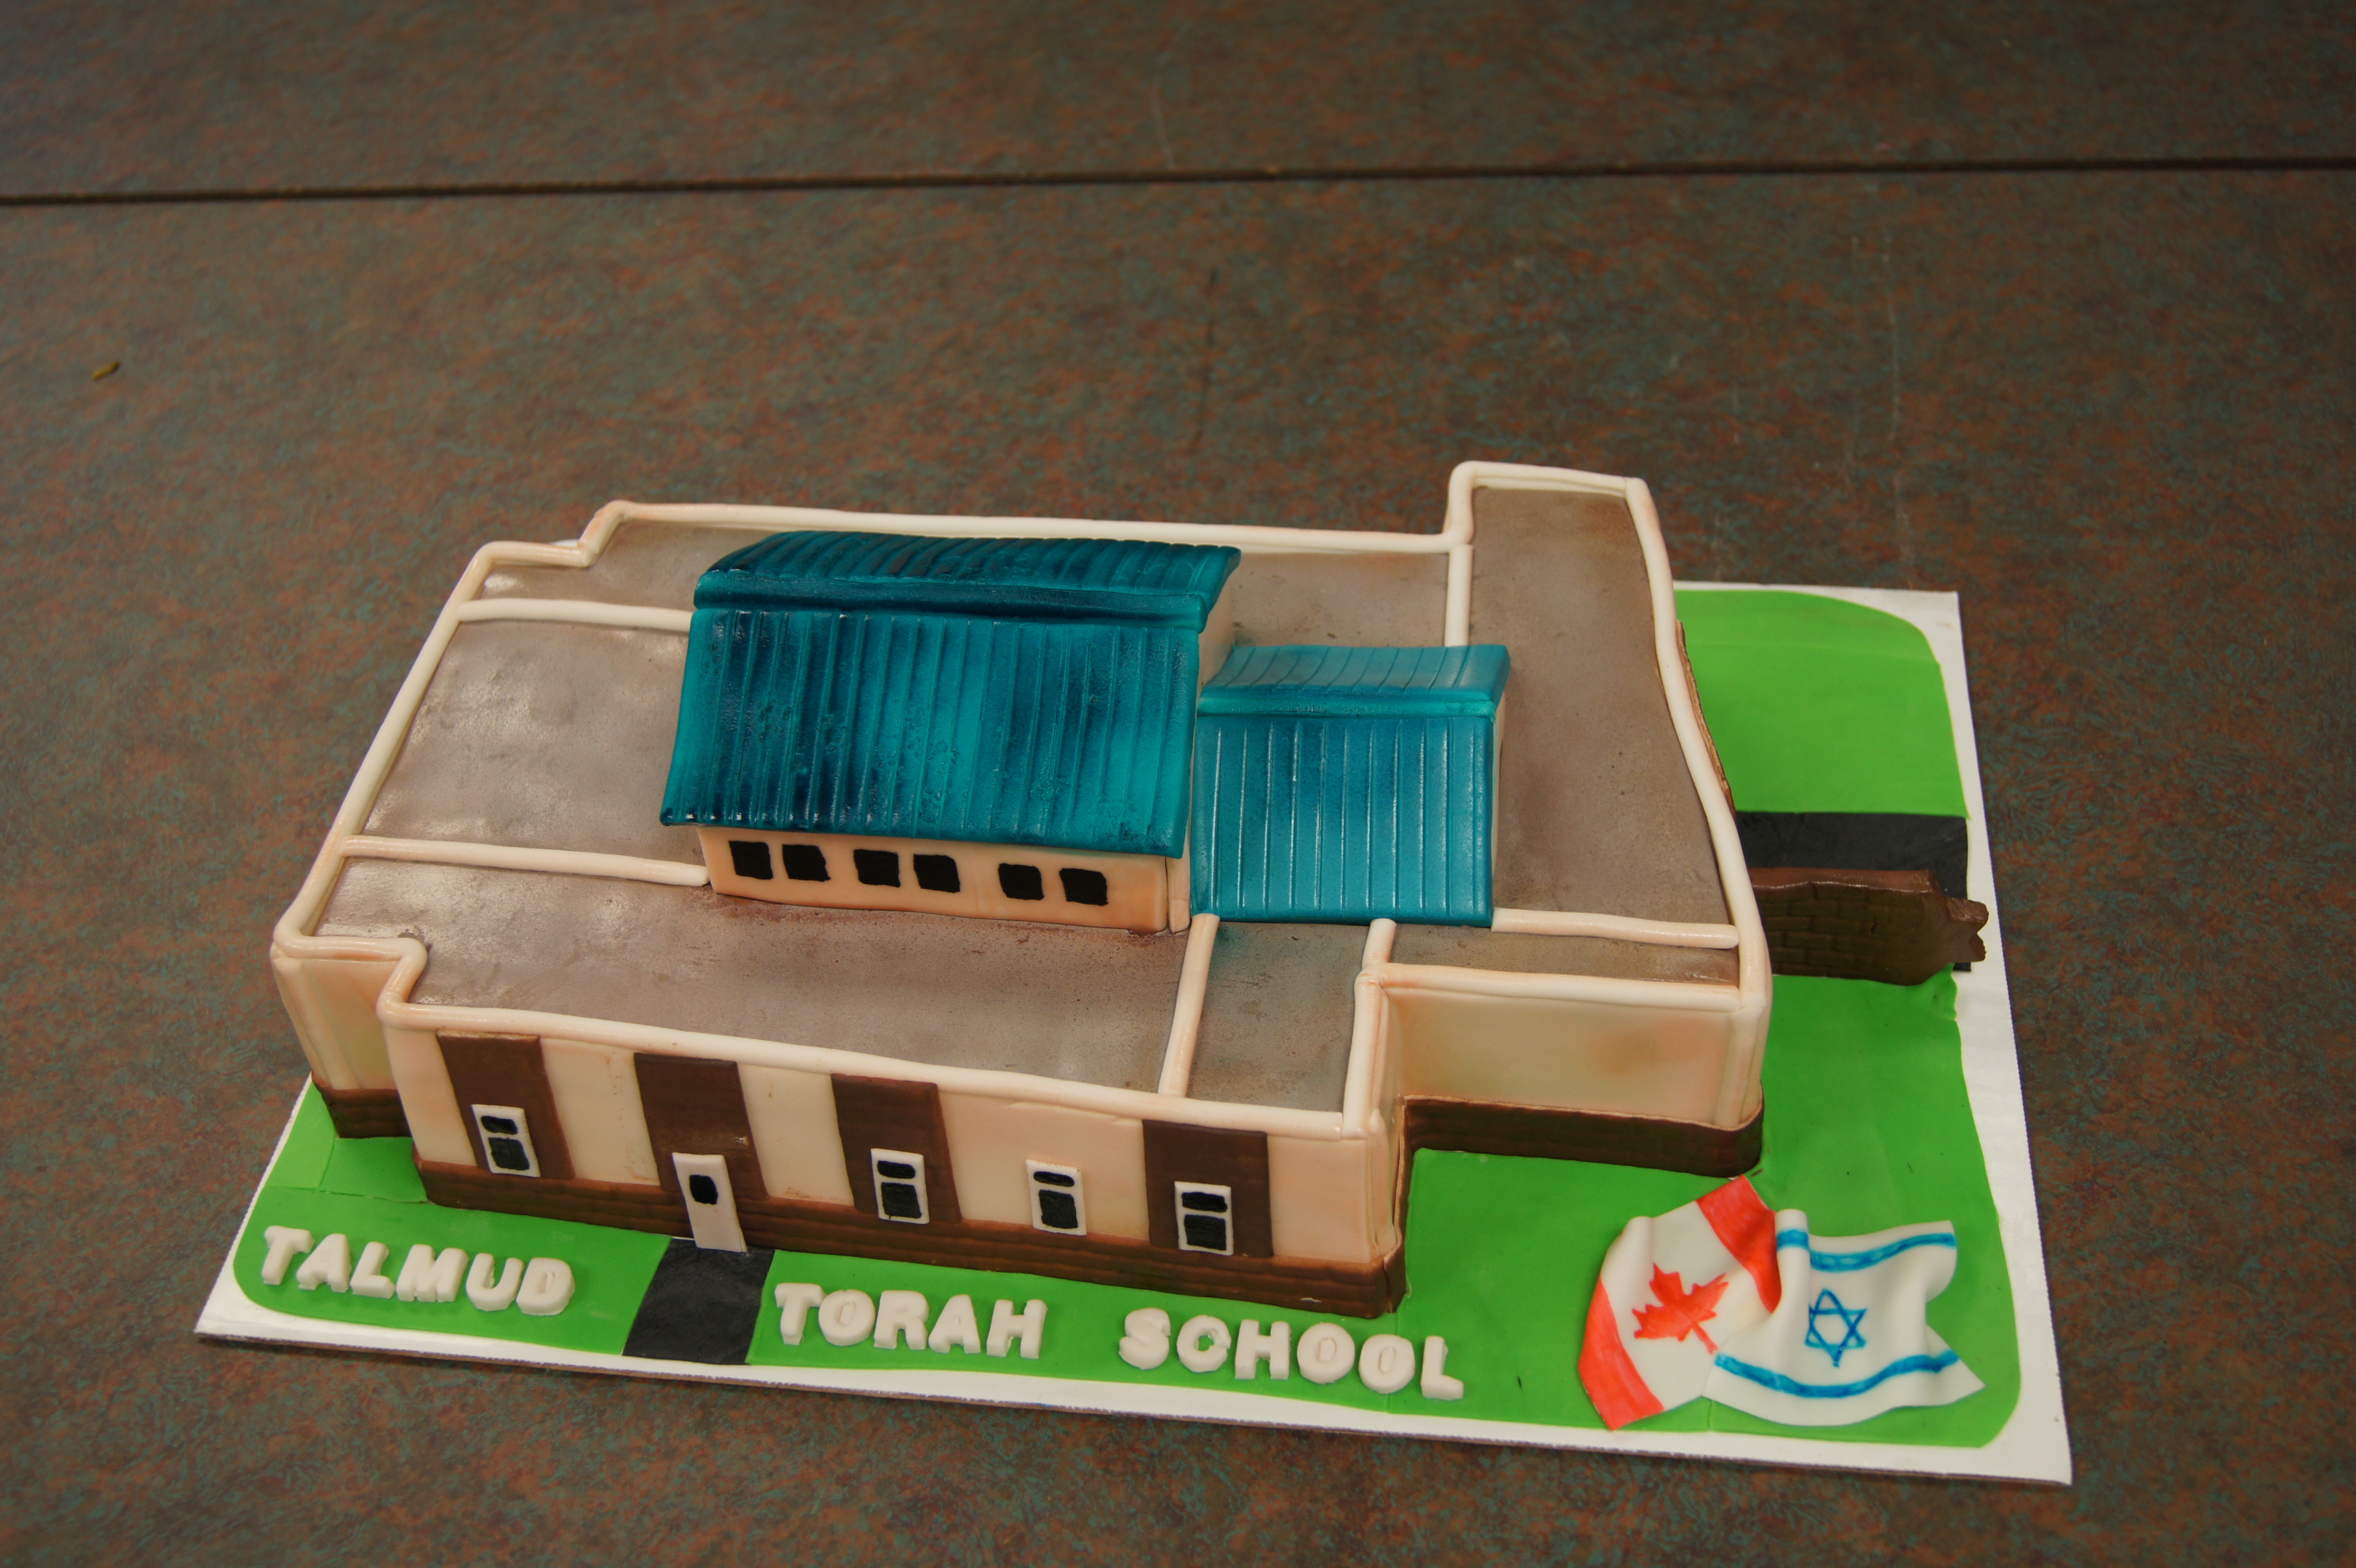 School Cake